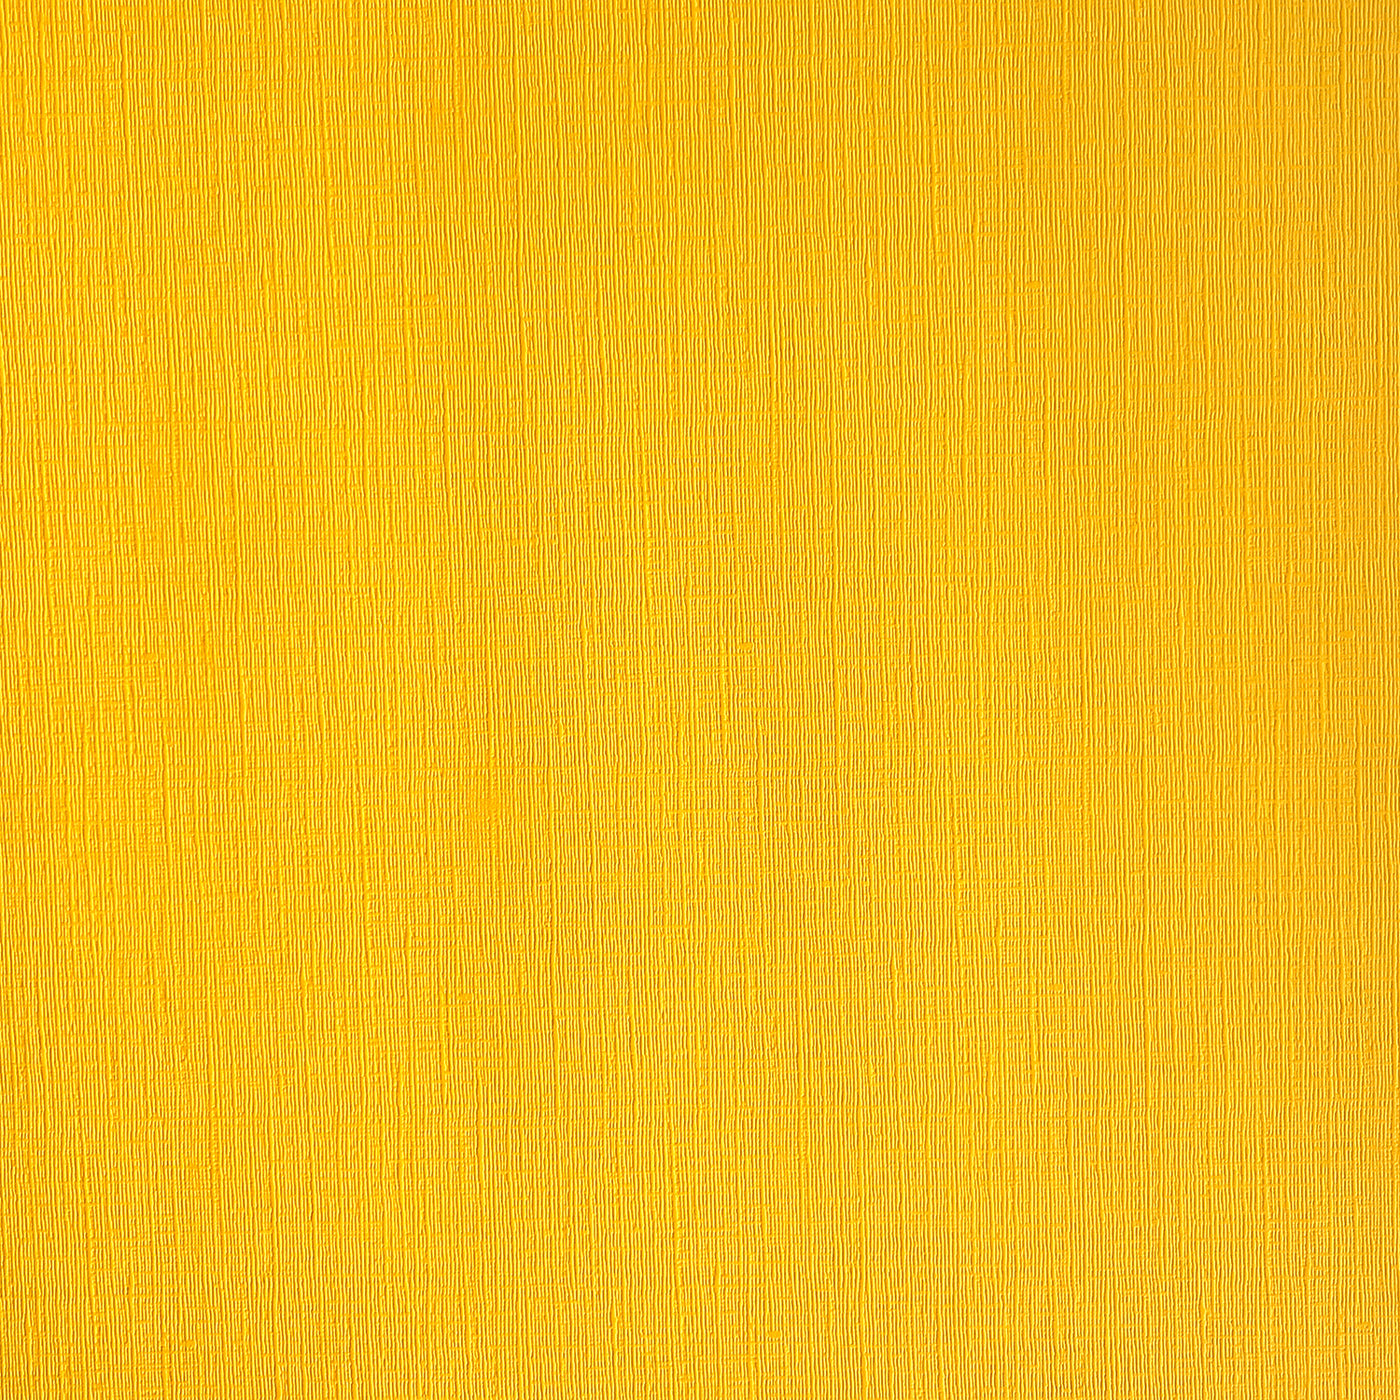 Banana Pepper - Textured 12x12 Cardstock - daffodil yellow canvas scrapbook paper